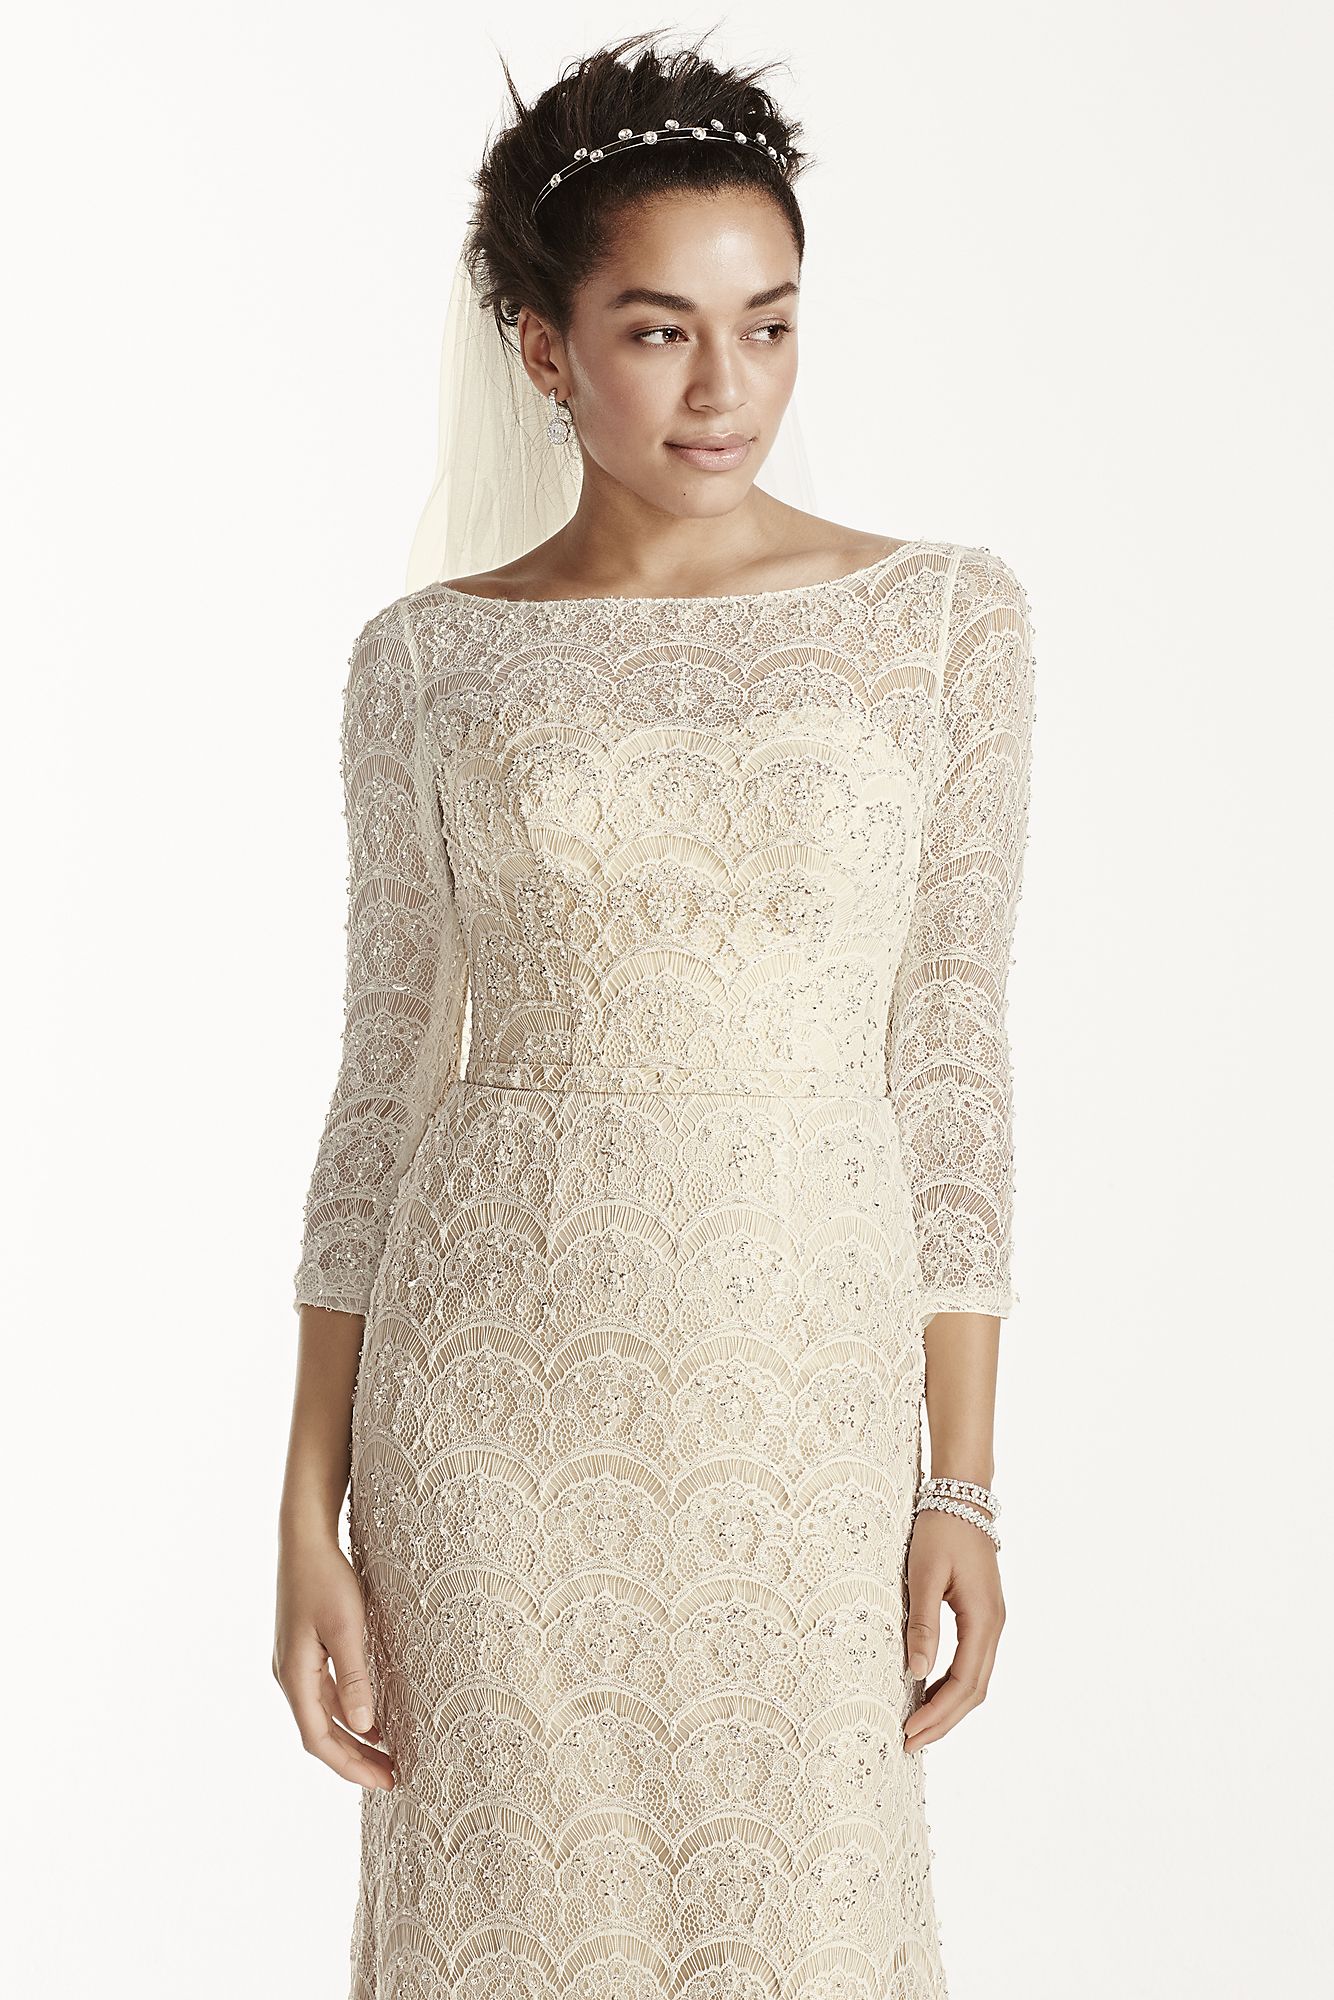 Beaded Lace 3/4 Sleeved Wedding Dress CWG711